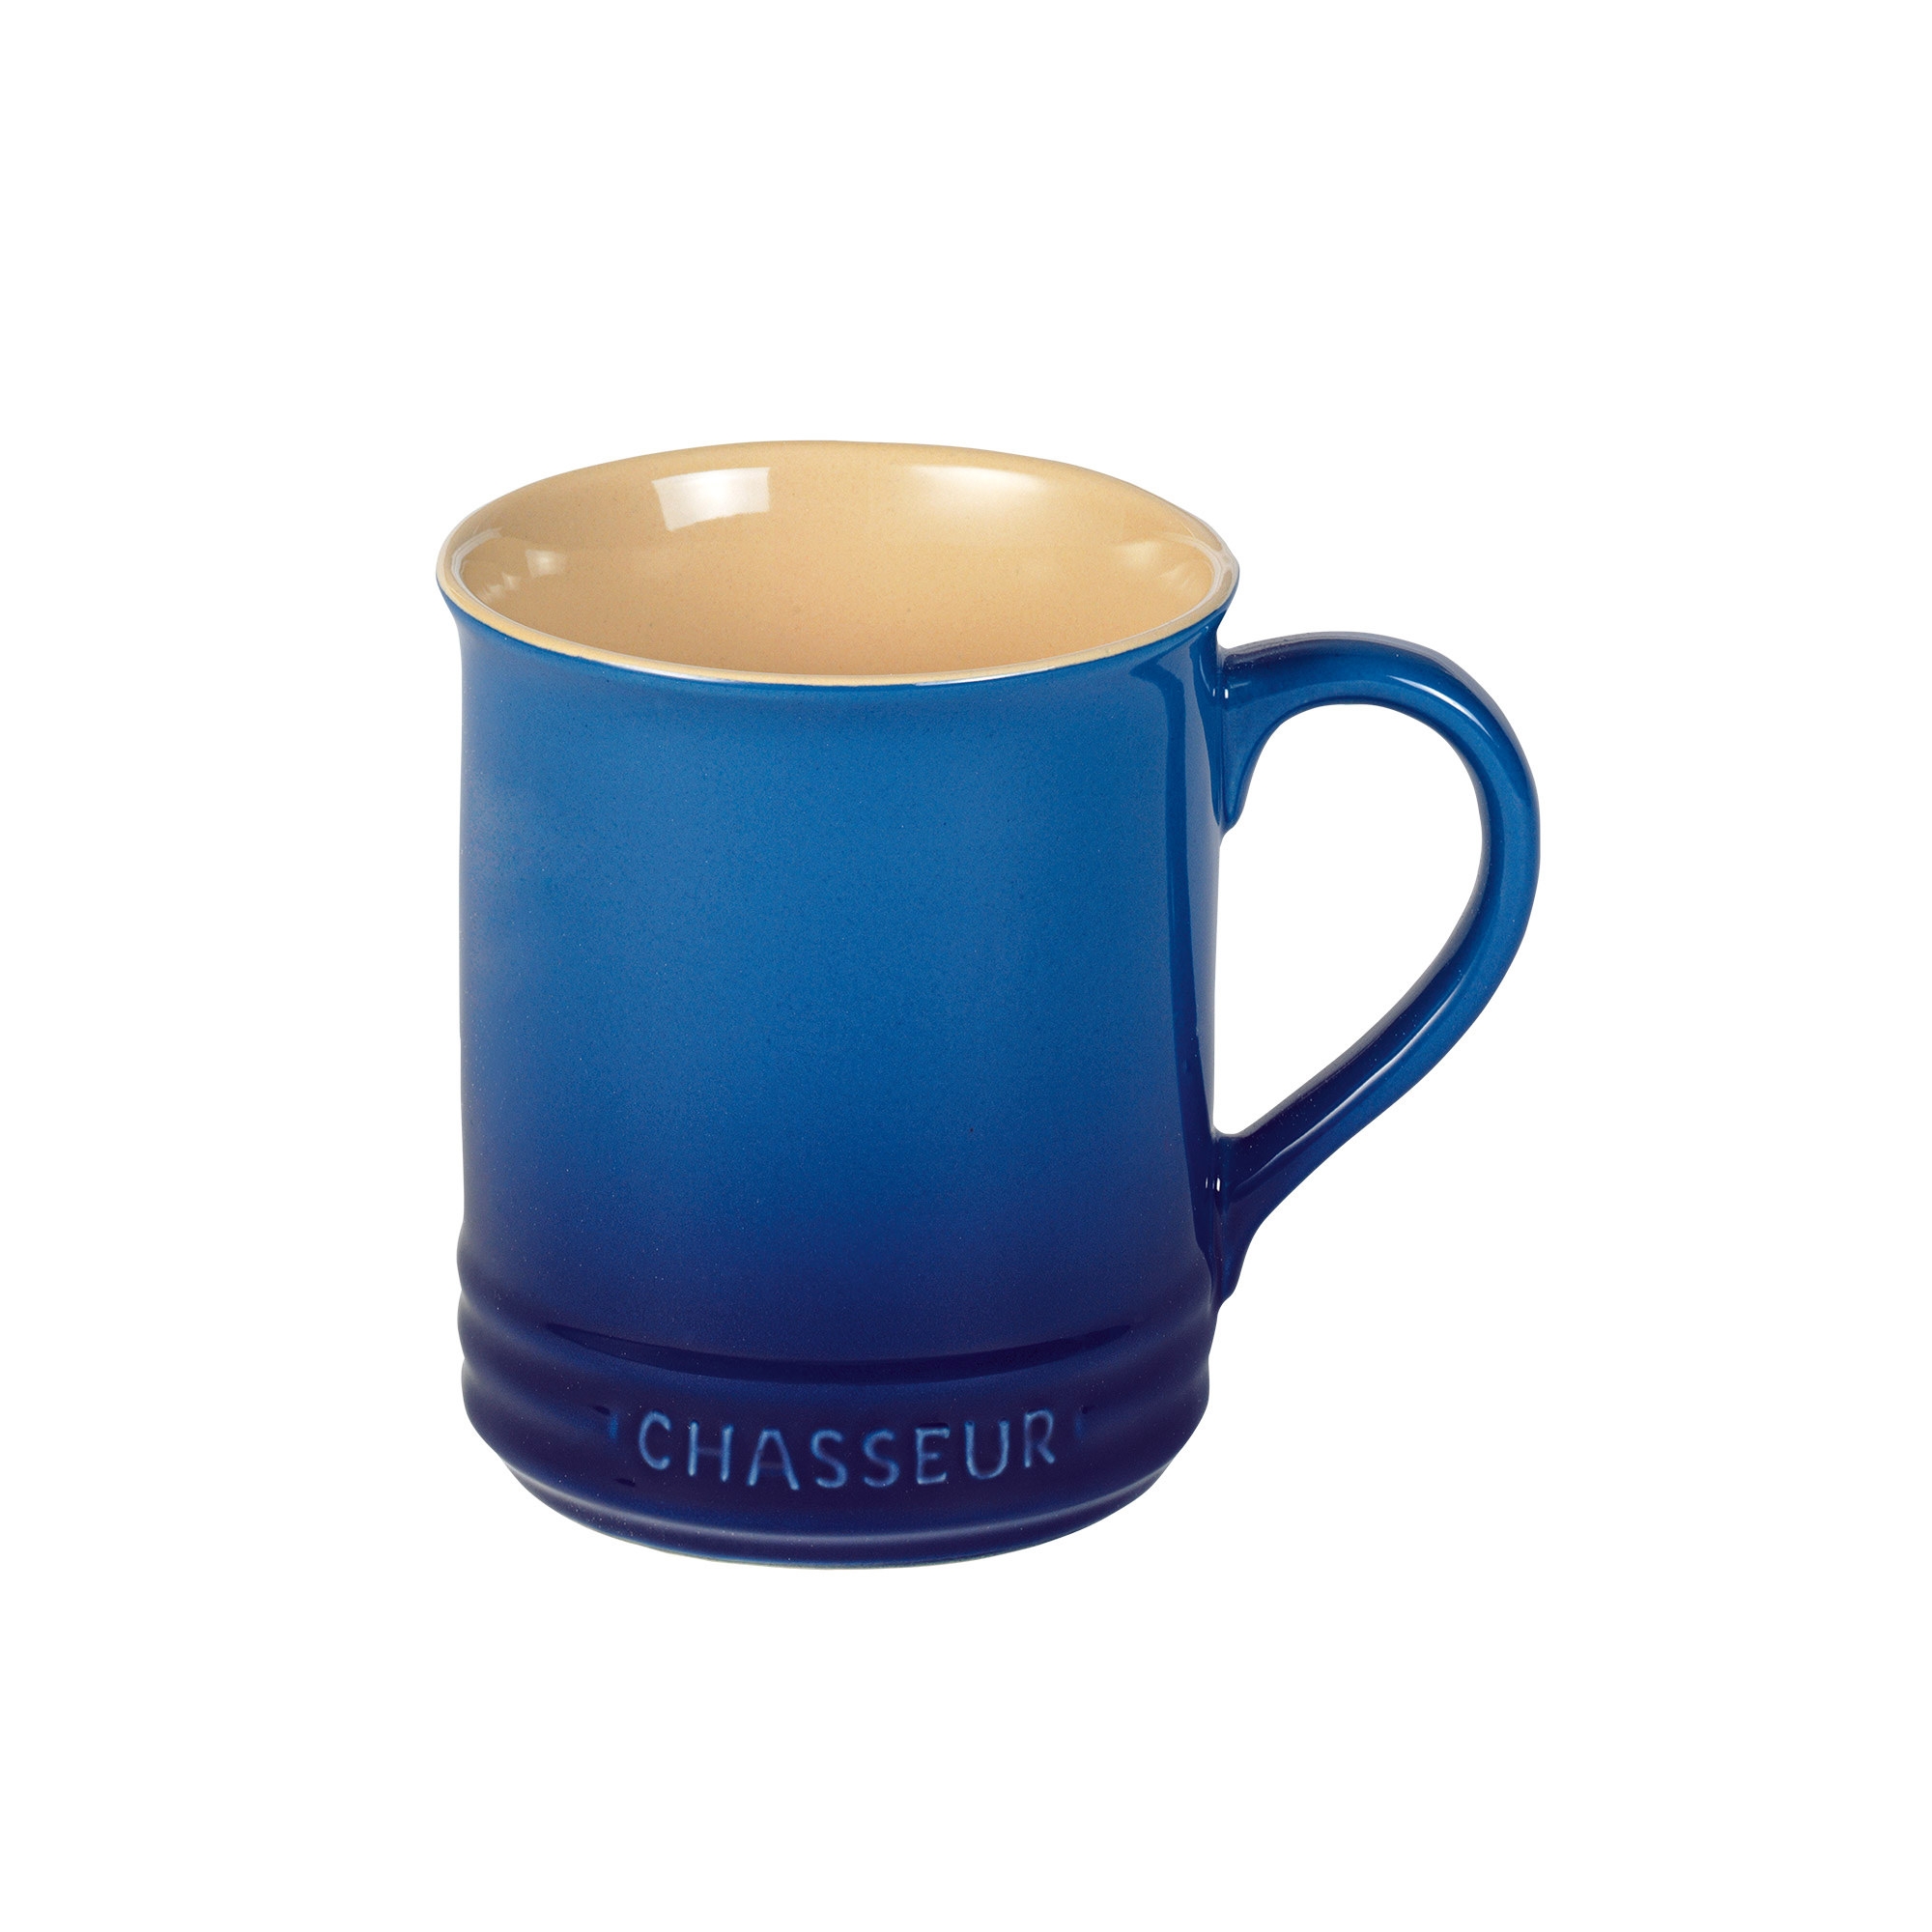 Chasseur La Cuisson Mug 350ml Blue Image 1